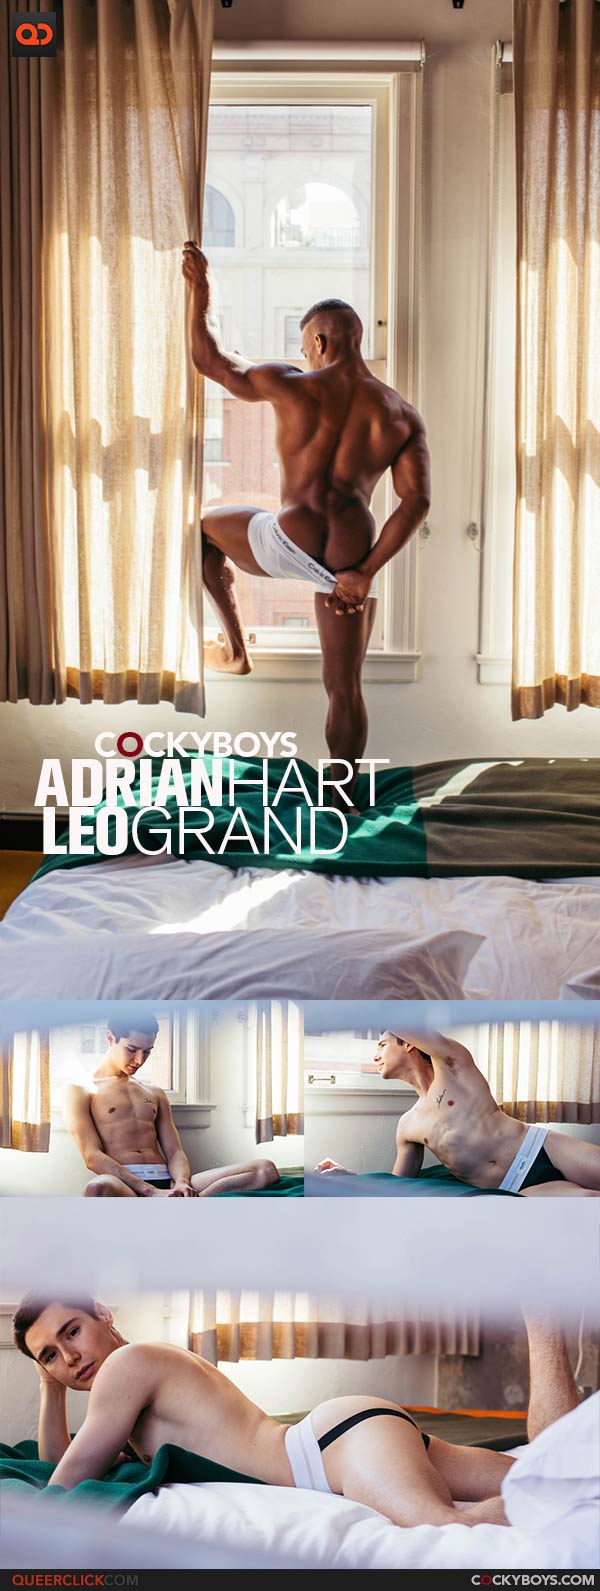 CockyBoys: Adrian Hart and Leo Grand